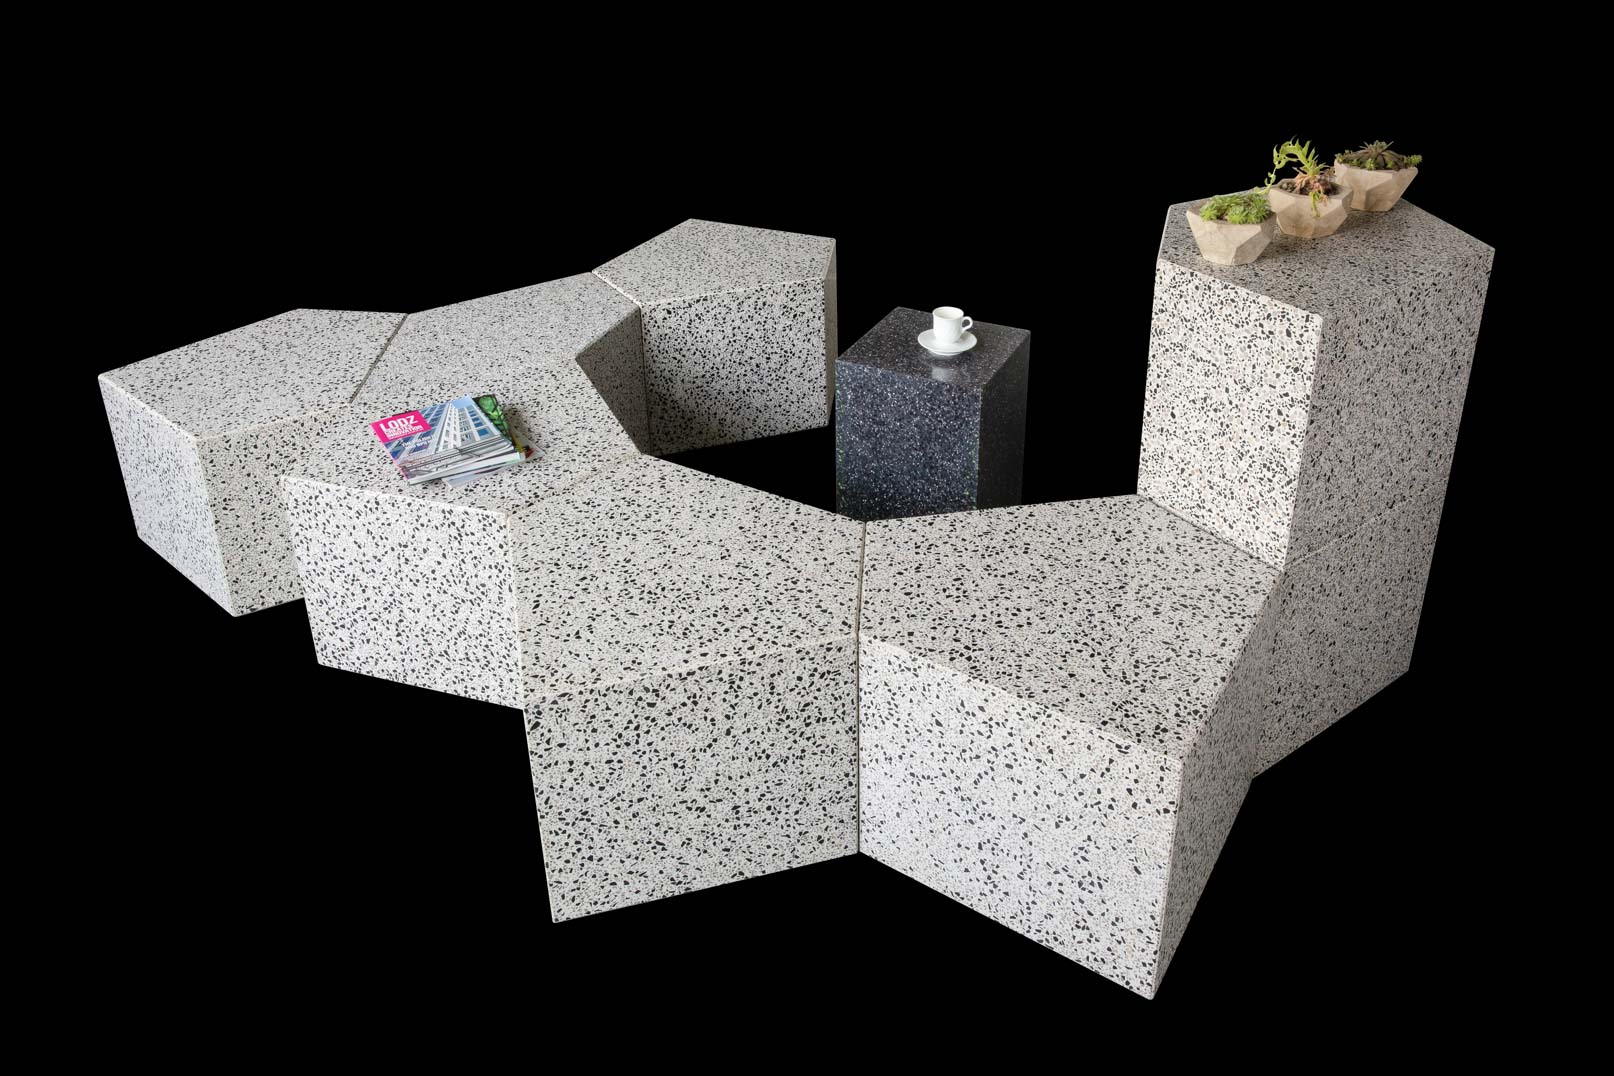 modular objects made of epoxy terrazzo